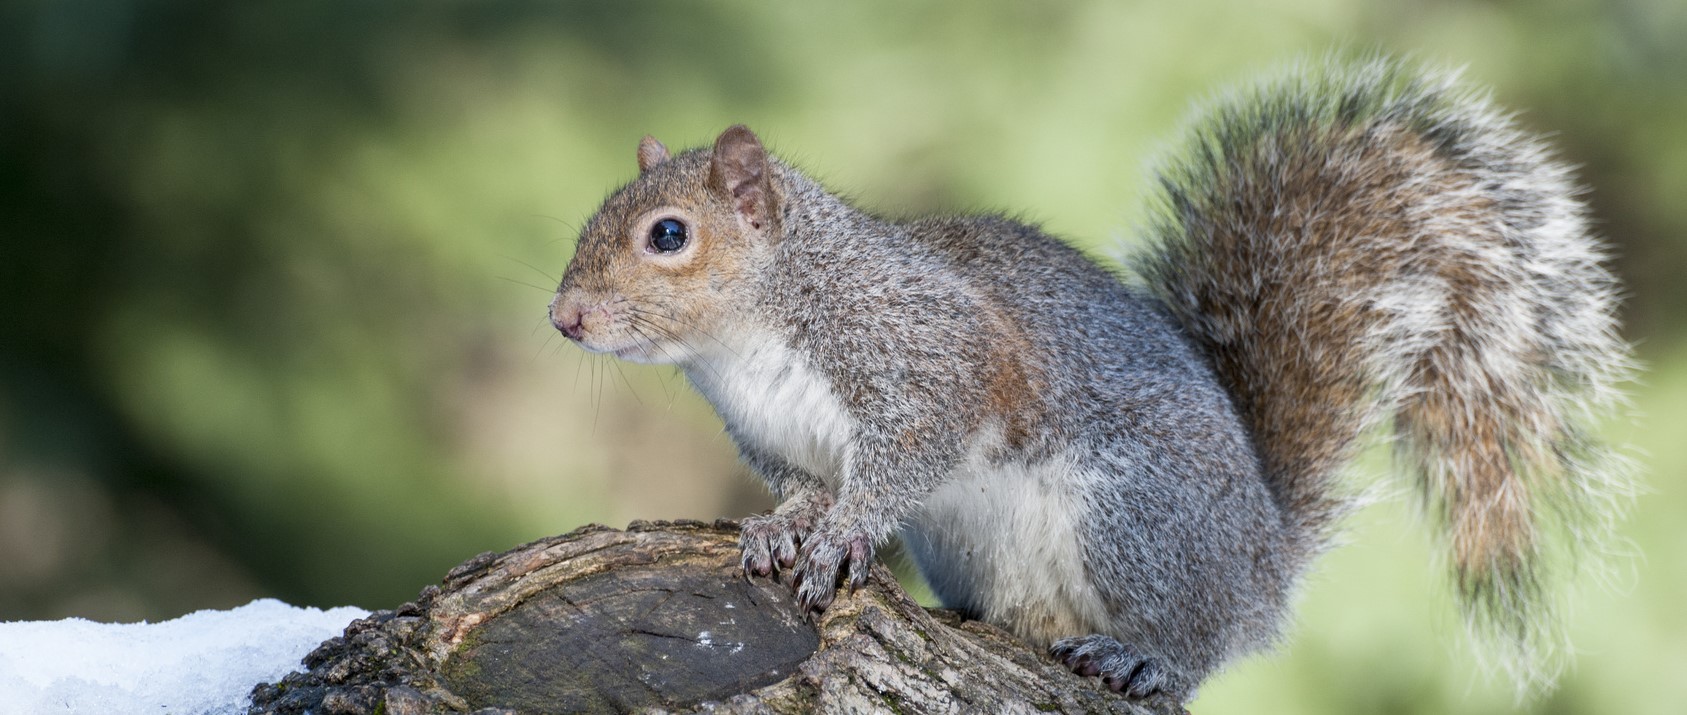 apex pest control services vancouver squirrel